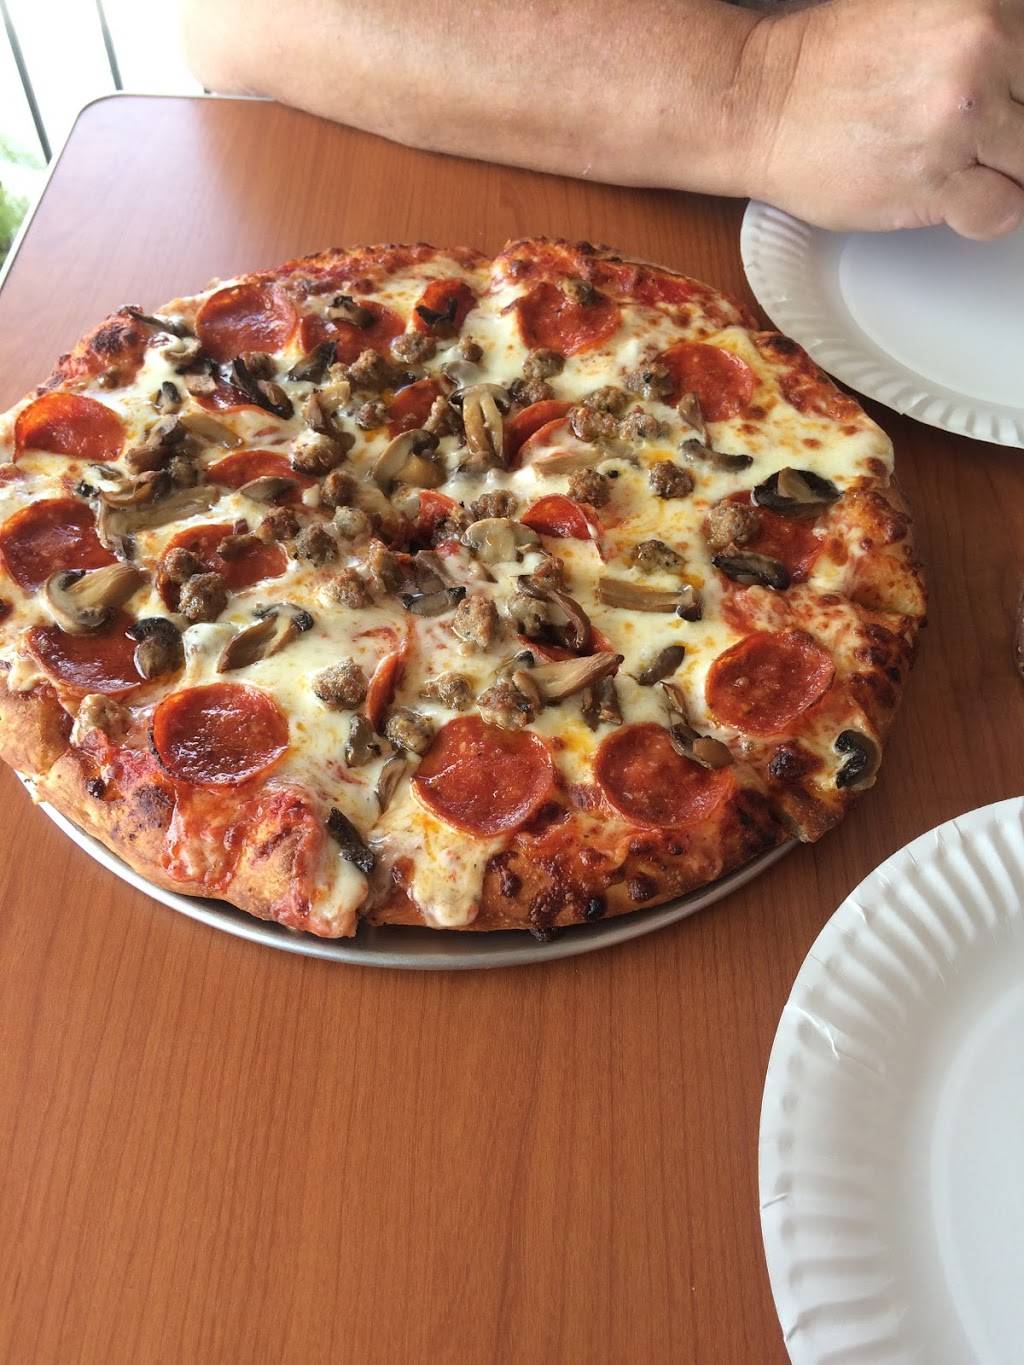 Marios Pizza | 2643 Niles St, Bakersfield, CA 93306 | Phone: (661) 742-0423